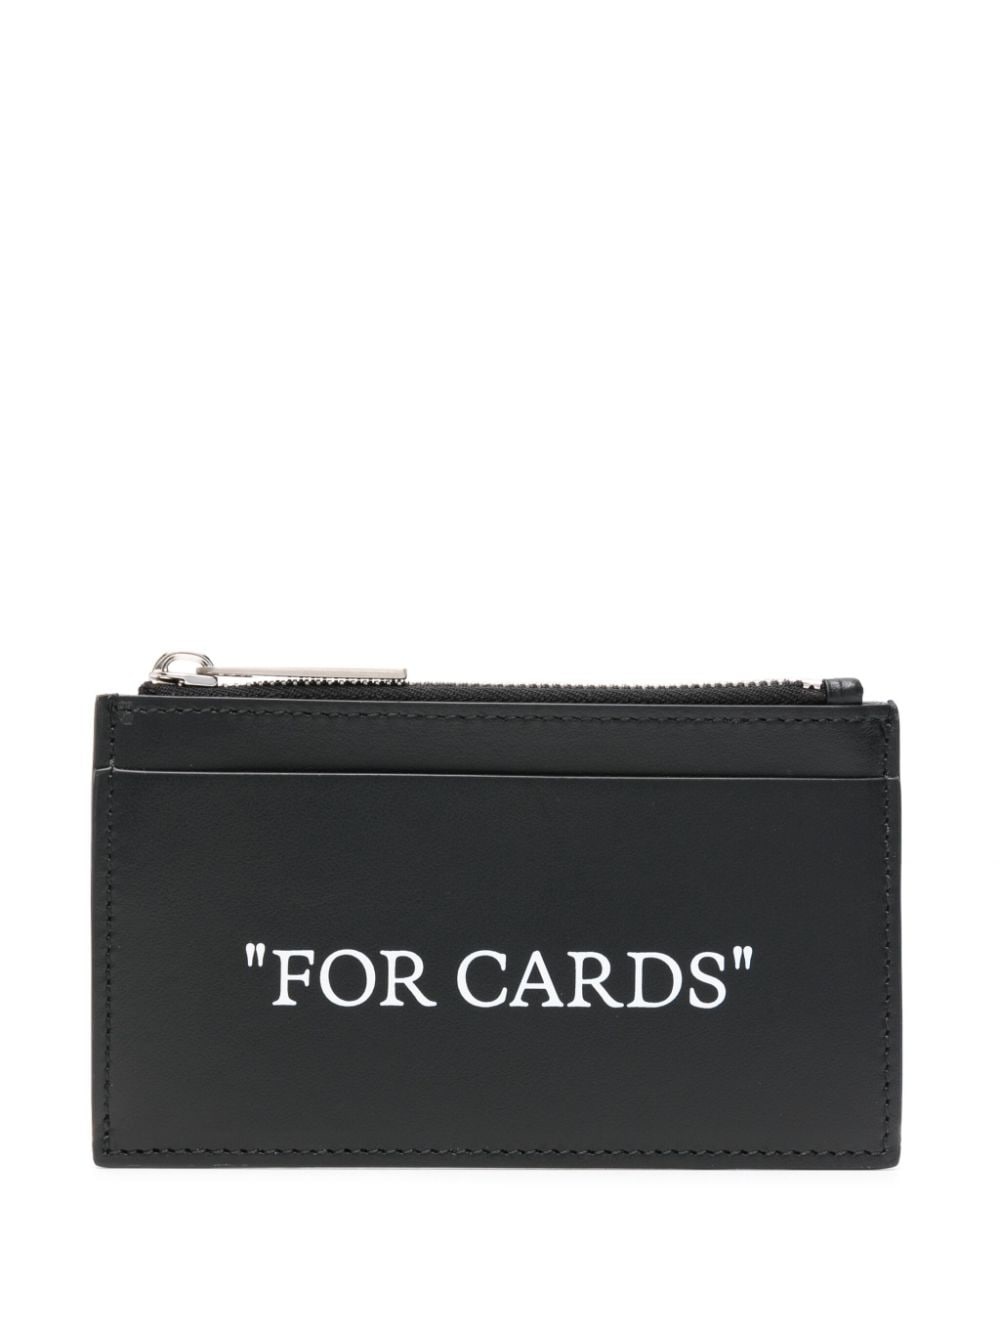 For Cards leather cardholder - 1